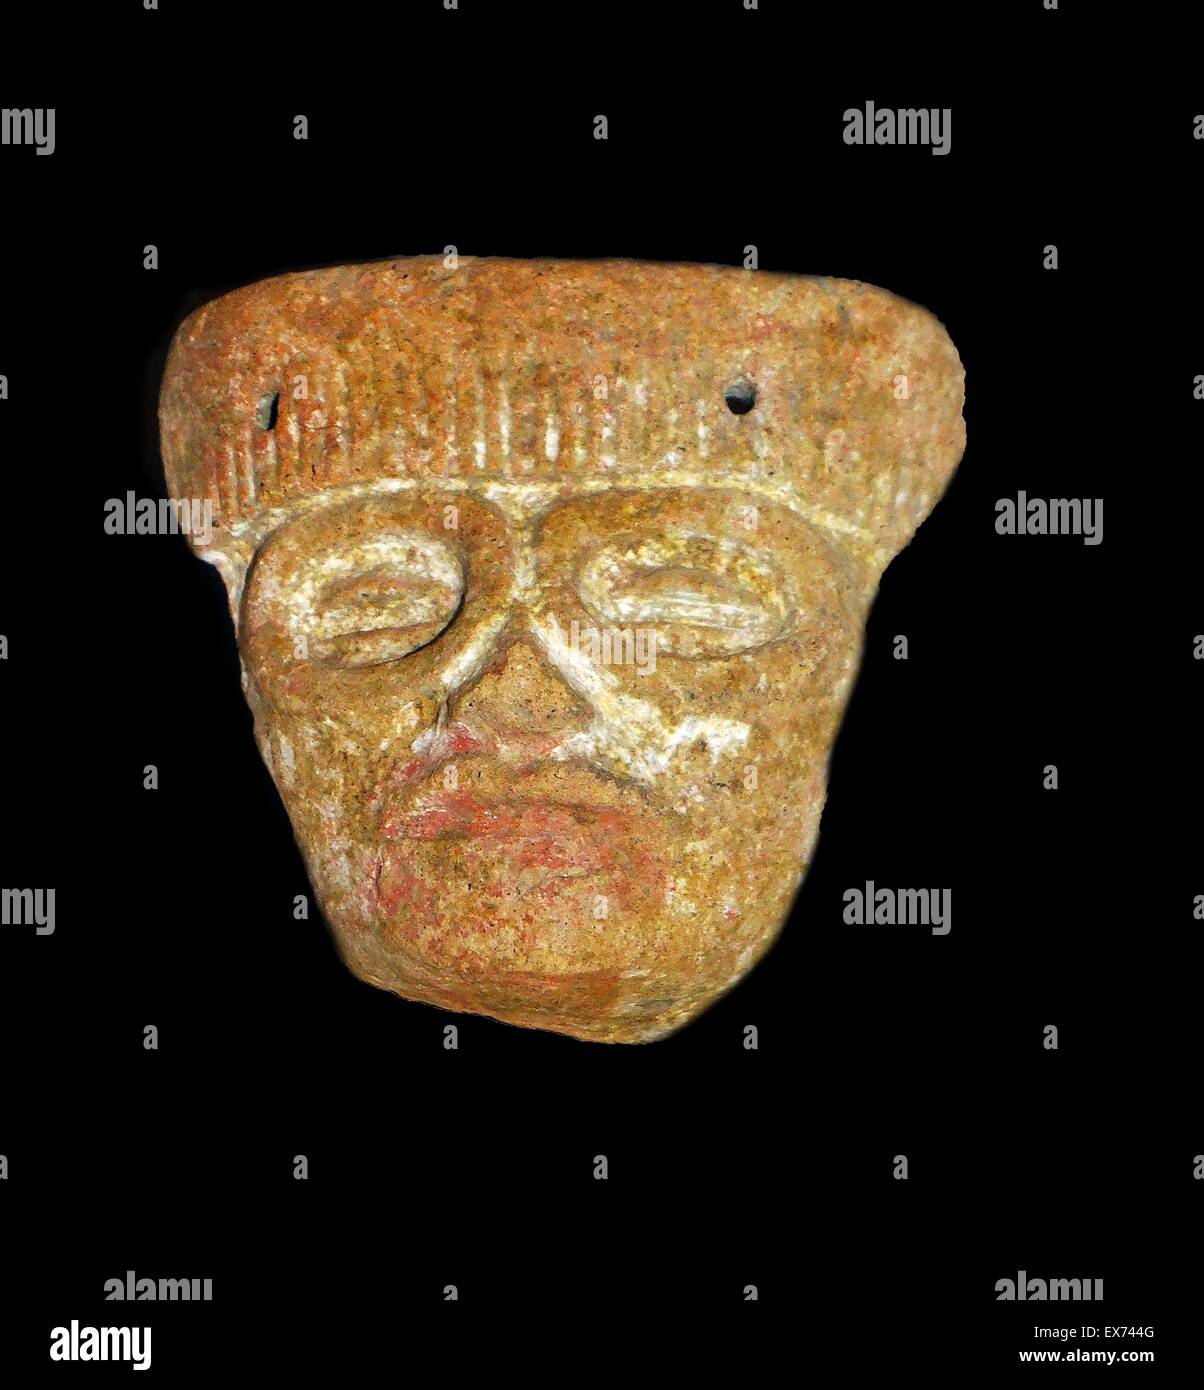 Mayan Stone mask, Teotihuacan, Mexico 150 BC - AD 750 Stock Photo